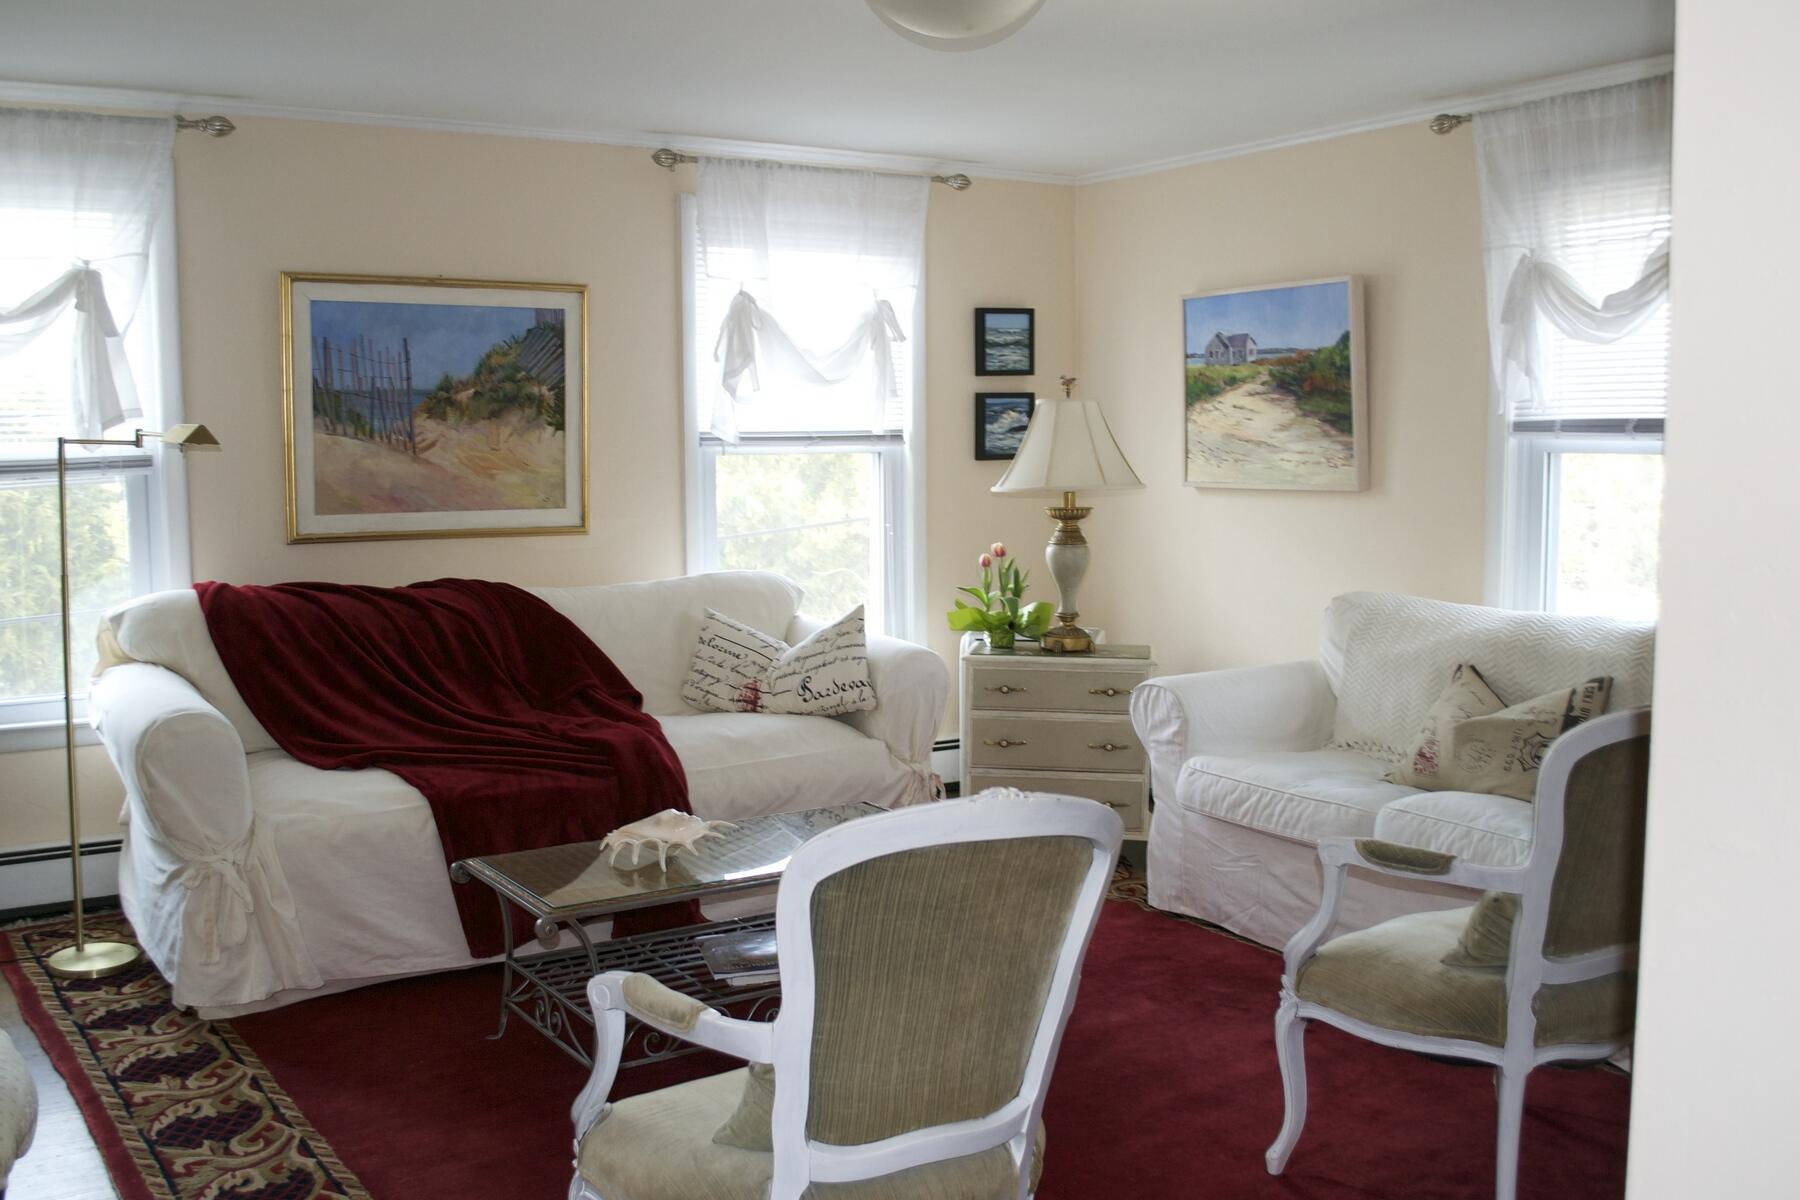 Rental Property at Village Of Southampton, Village Of Southampton, Hamptons, NY - Bedrooms: 2 
Bathrooms: 1  - $27,500 MO.